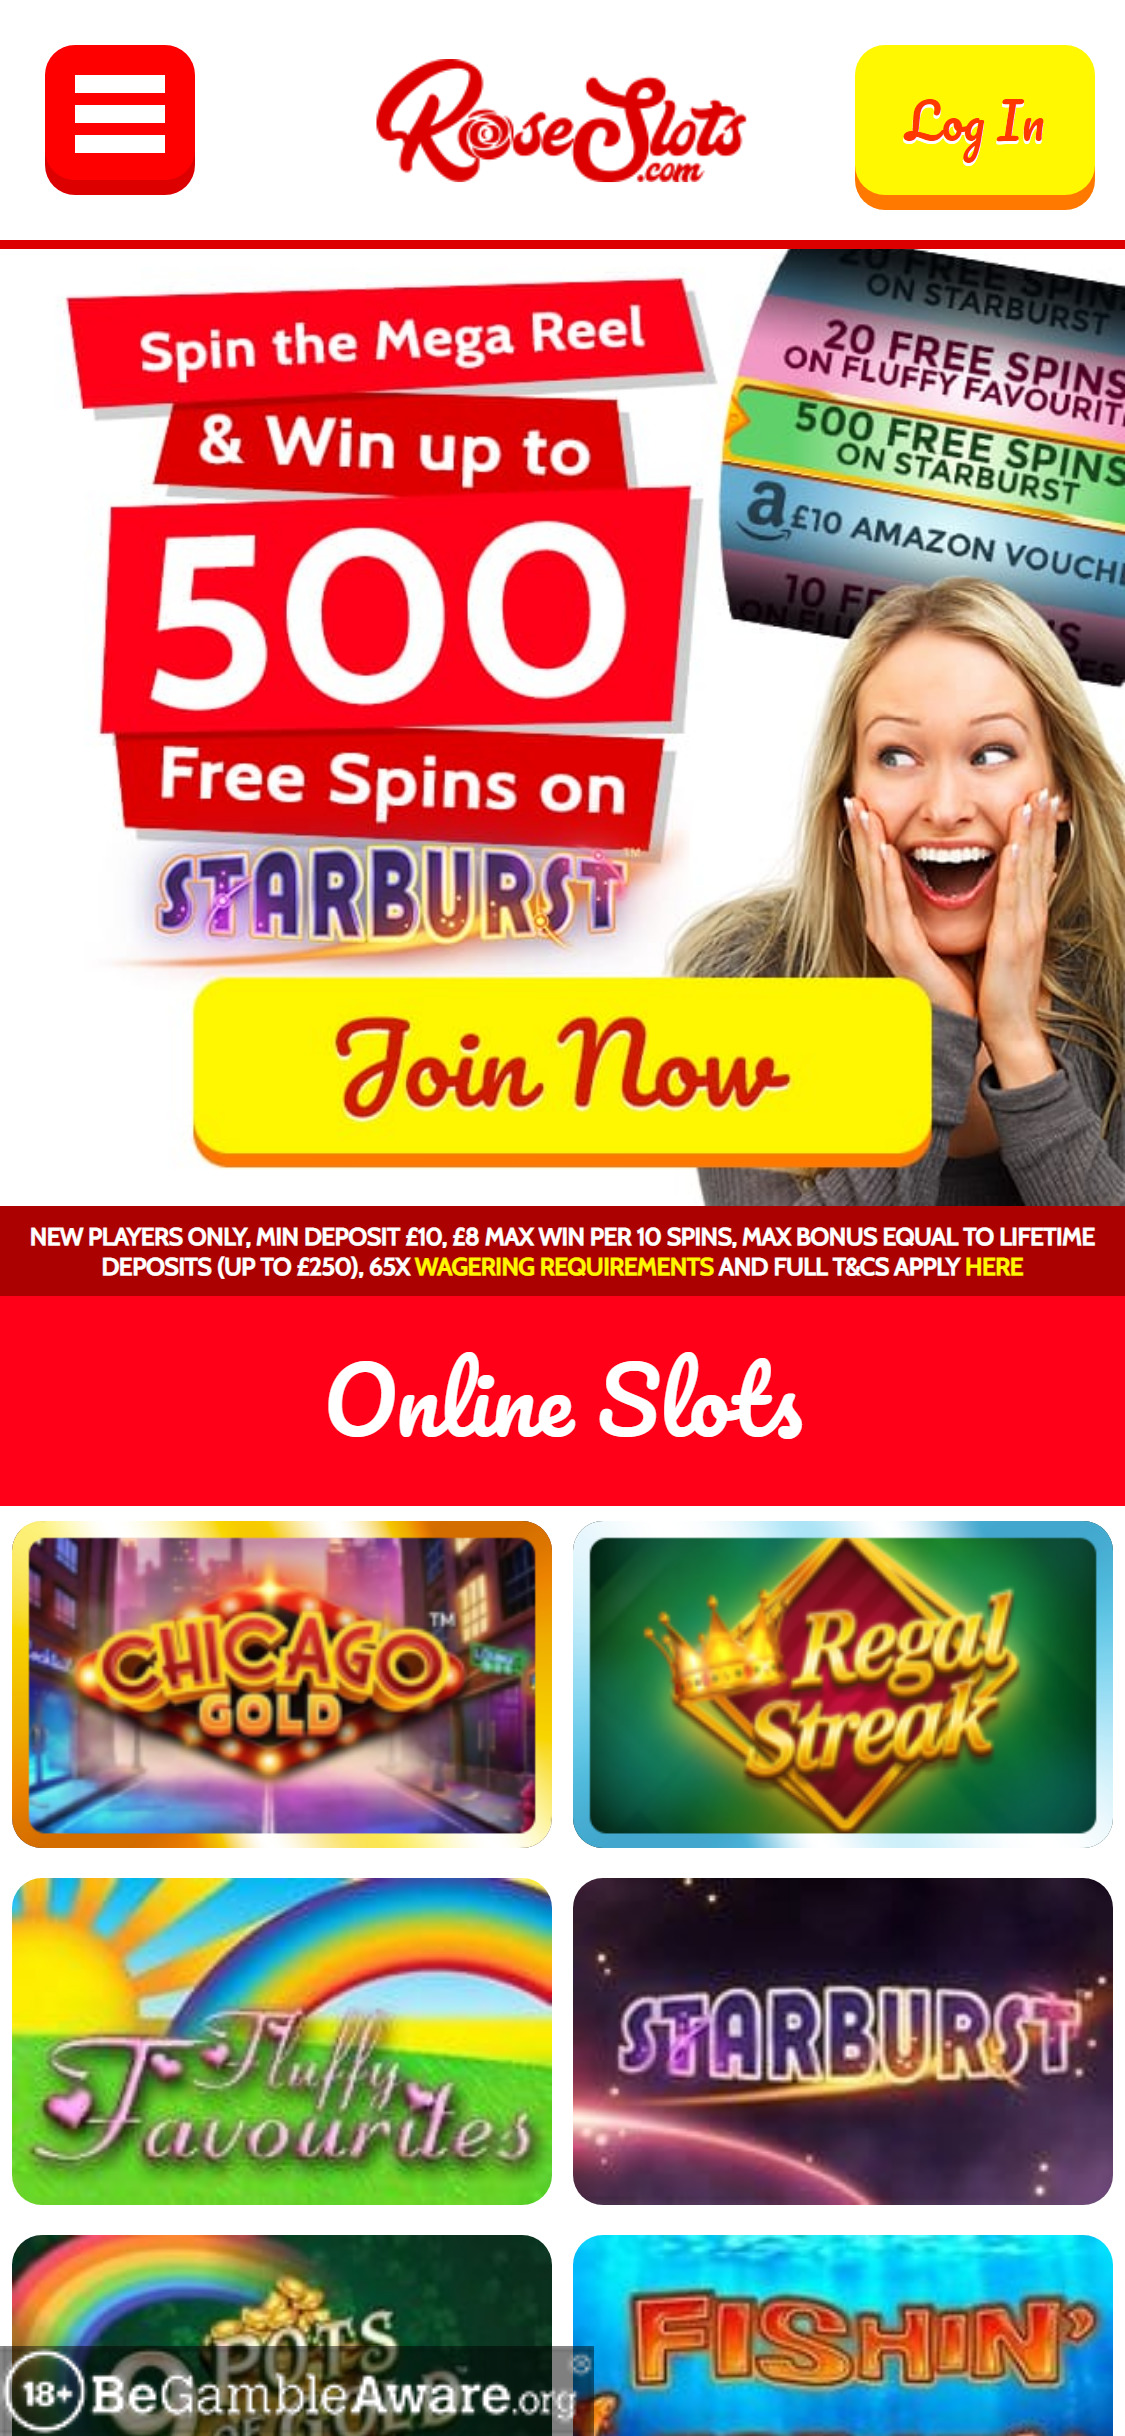 Rose Slots Casino Mobile Review